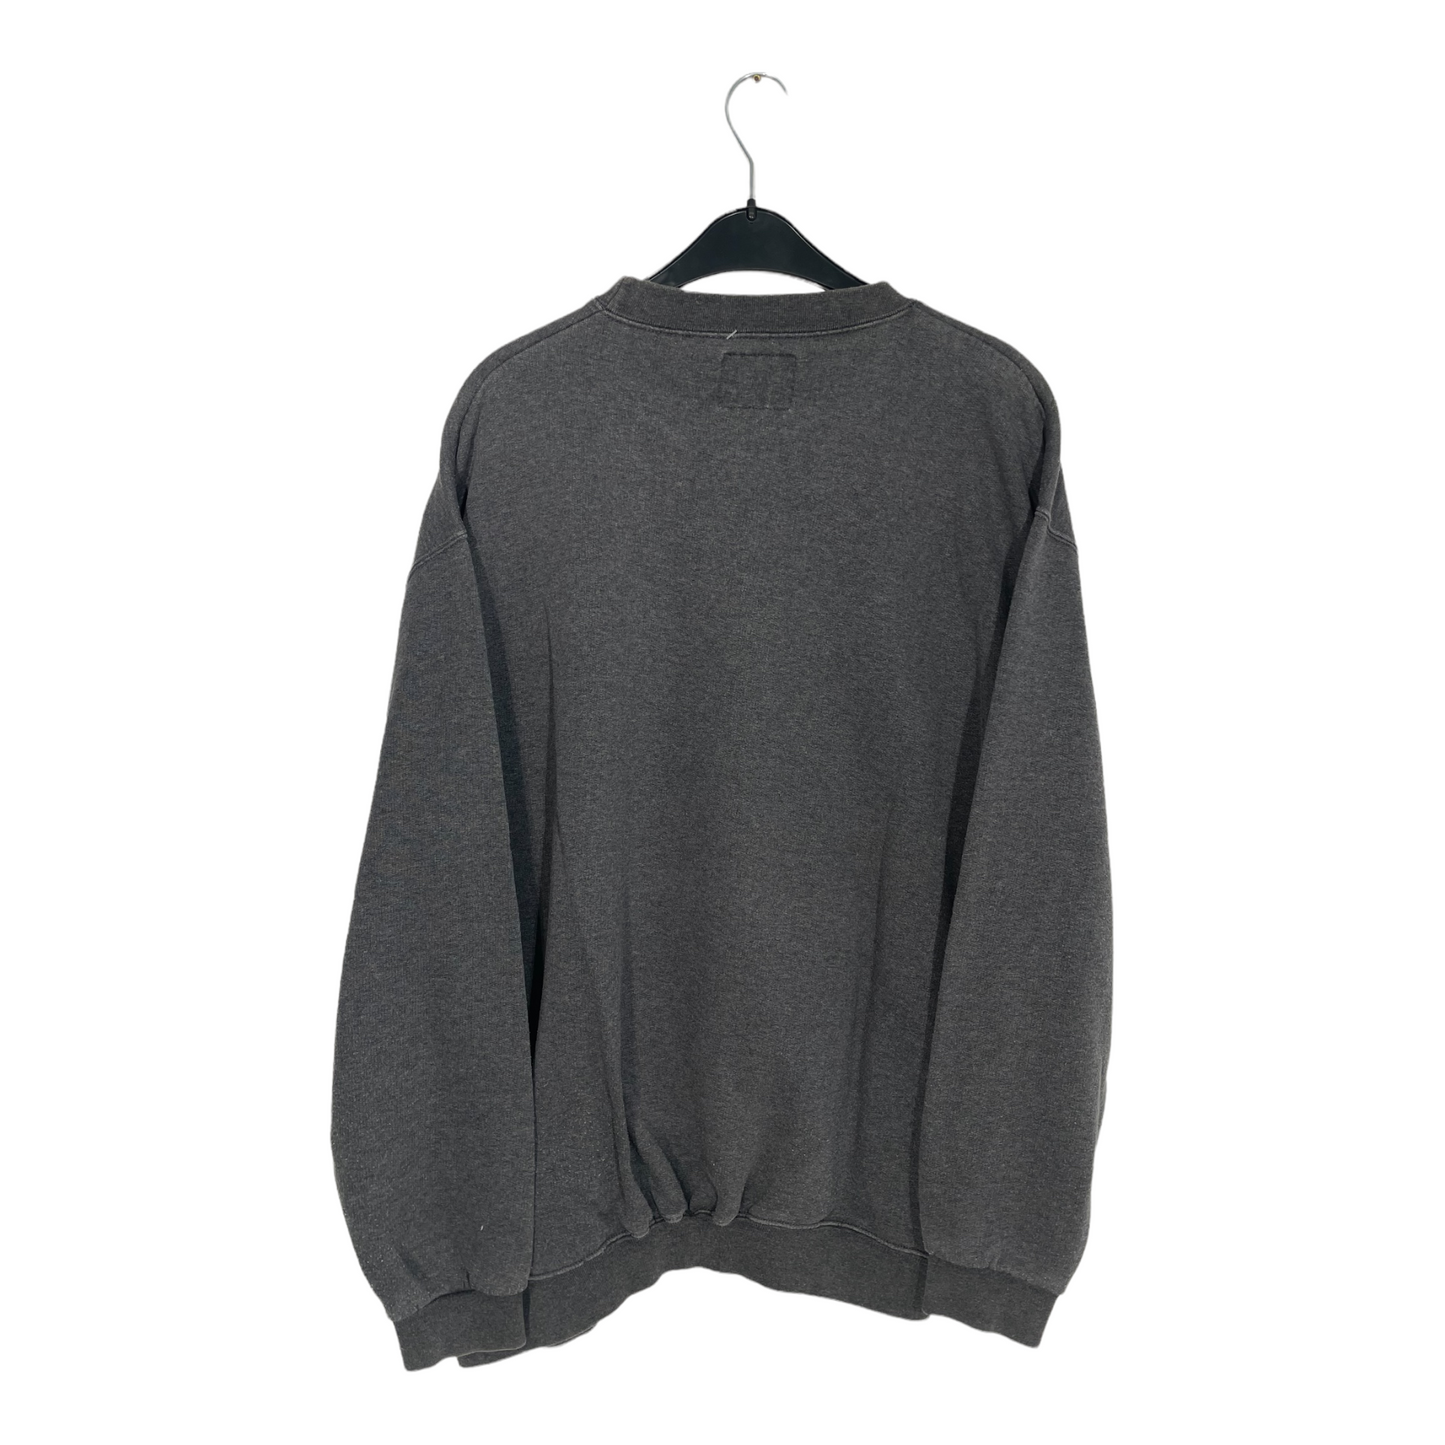 Levi’s gray sweatshirt